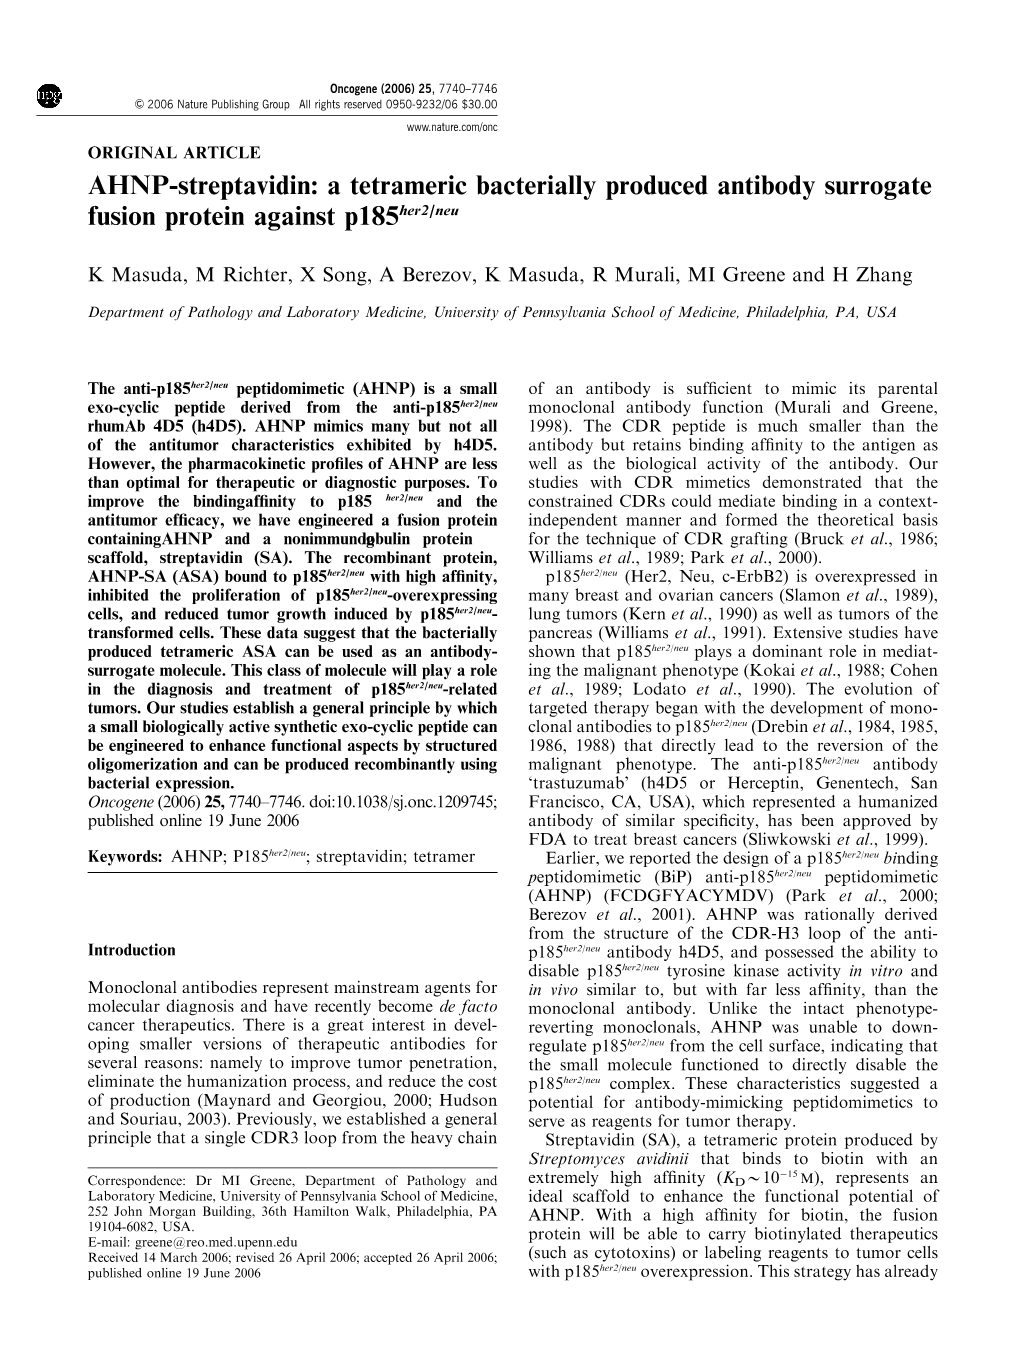 AHNP-Streptavidin: a Tetrameric Bacterially Produced Antibody Surrogate Fusion Protein Against P185her2/Neu